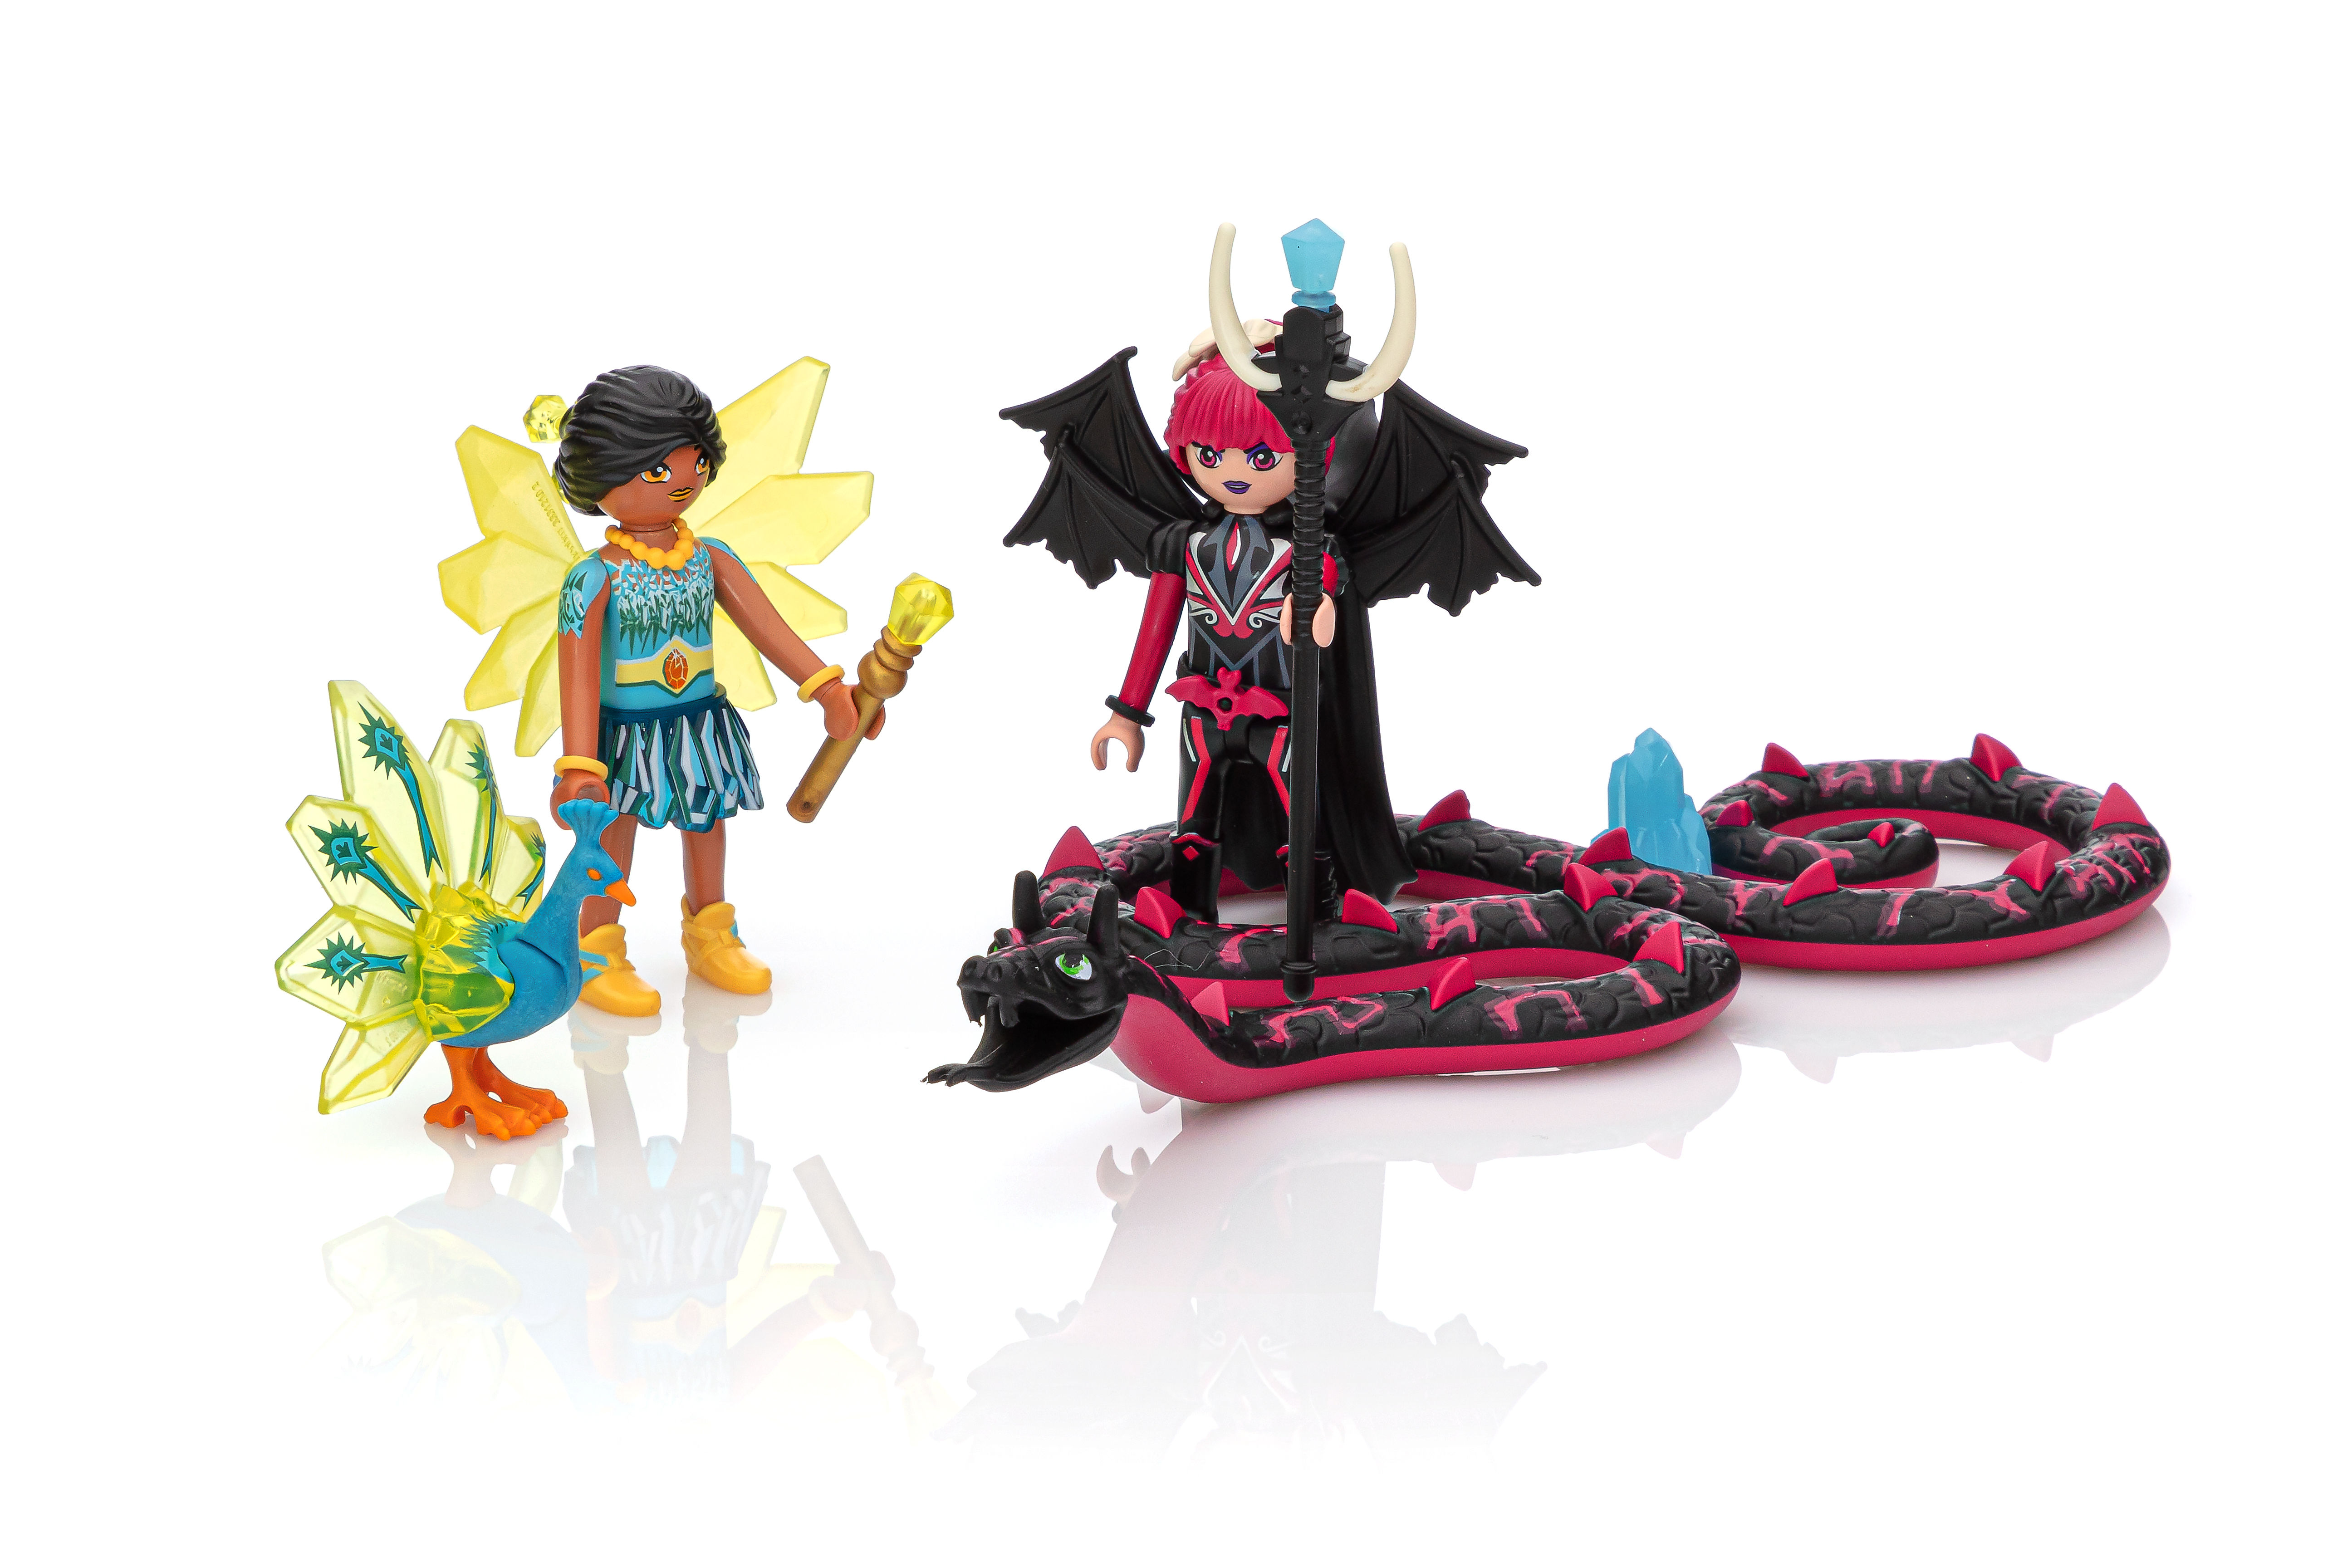 Playmobil Adventures of Ayuma Crystal Fairy and Bat Fairy with Soul Animals